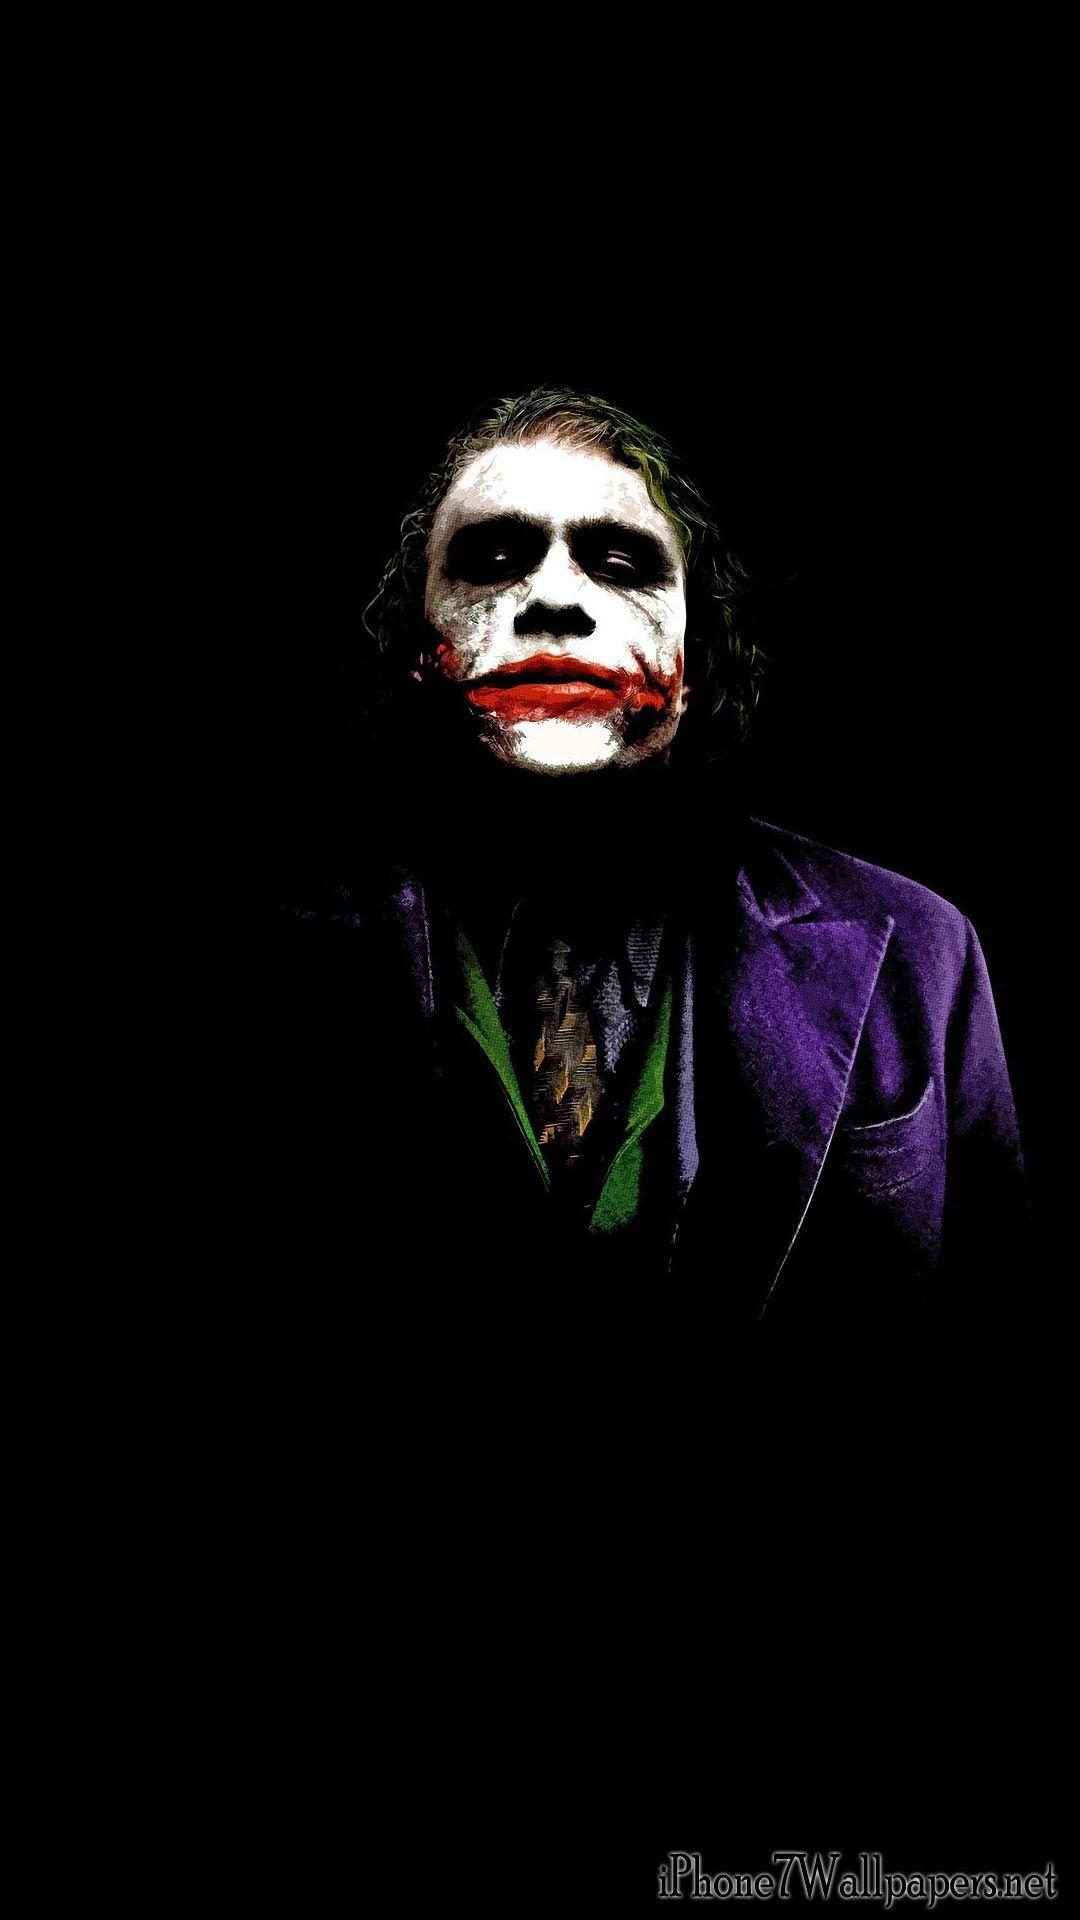 Joker 1080x1920 Wallpapers - Top Free Joker 1080x1920 Backgrounds ...